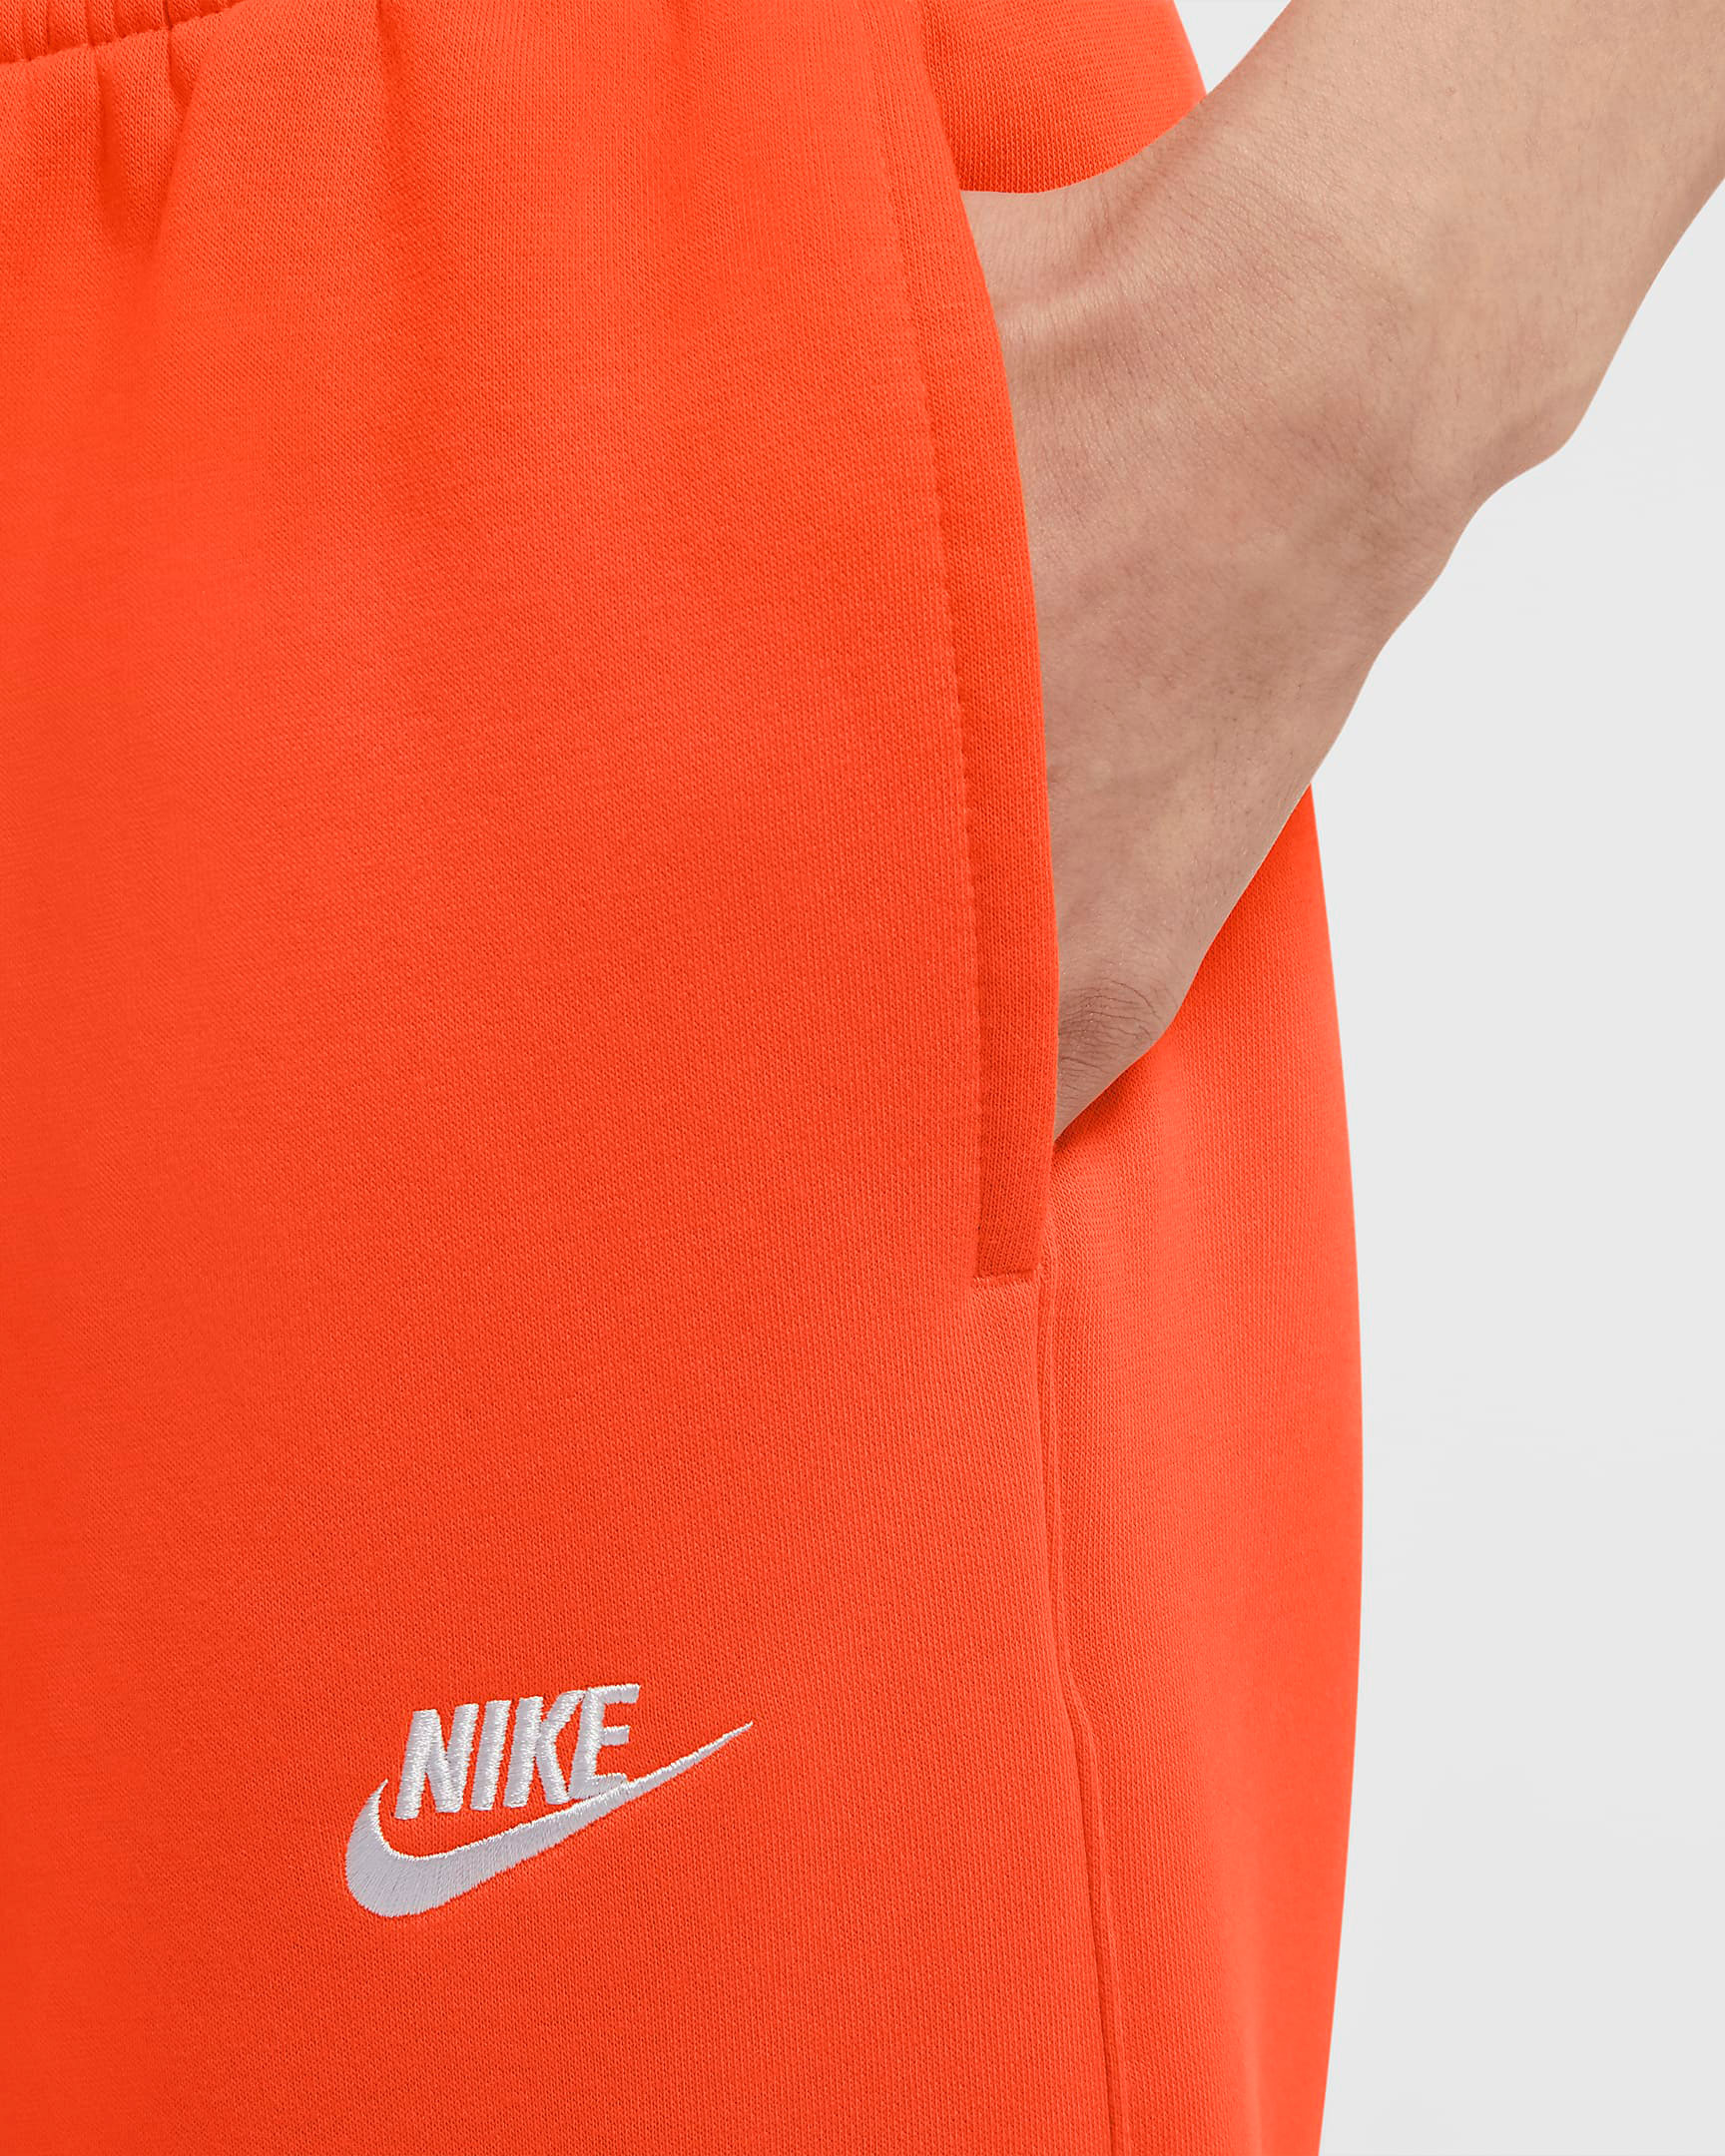 nike-dunk-high-syracuse-orange-pants